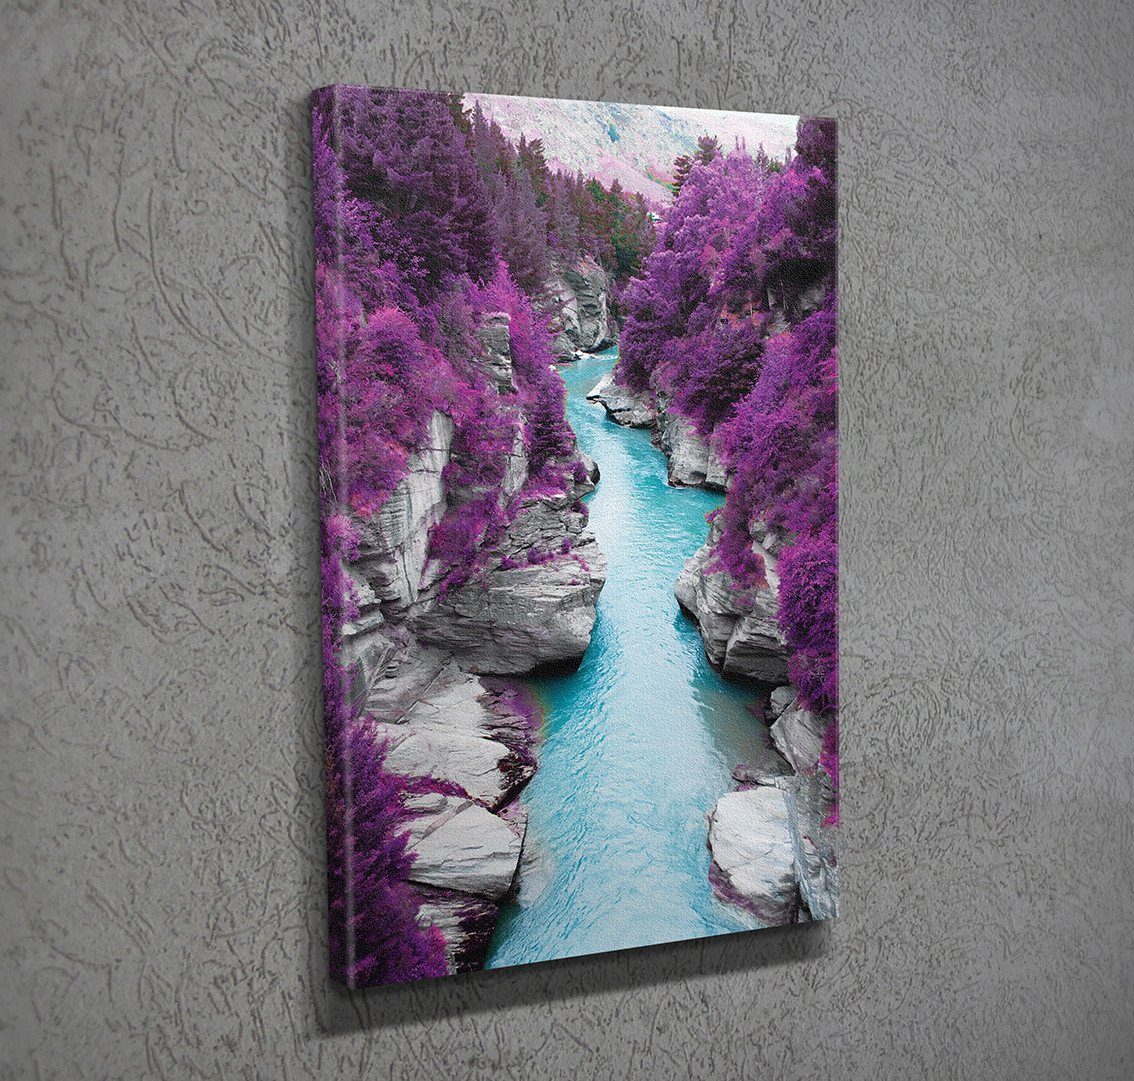 Wallity Leinwandbild MJS1307, Bunt, 30 x 40 cm, 100% Leinwand